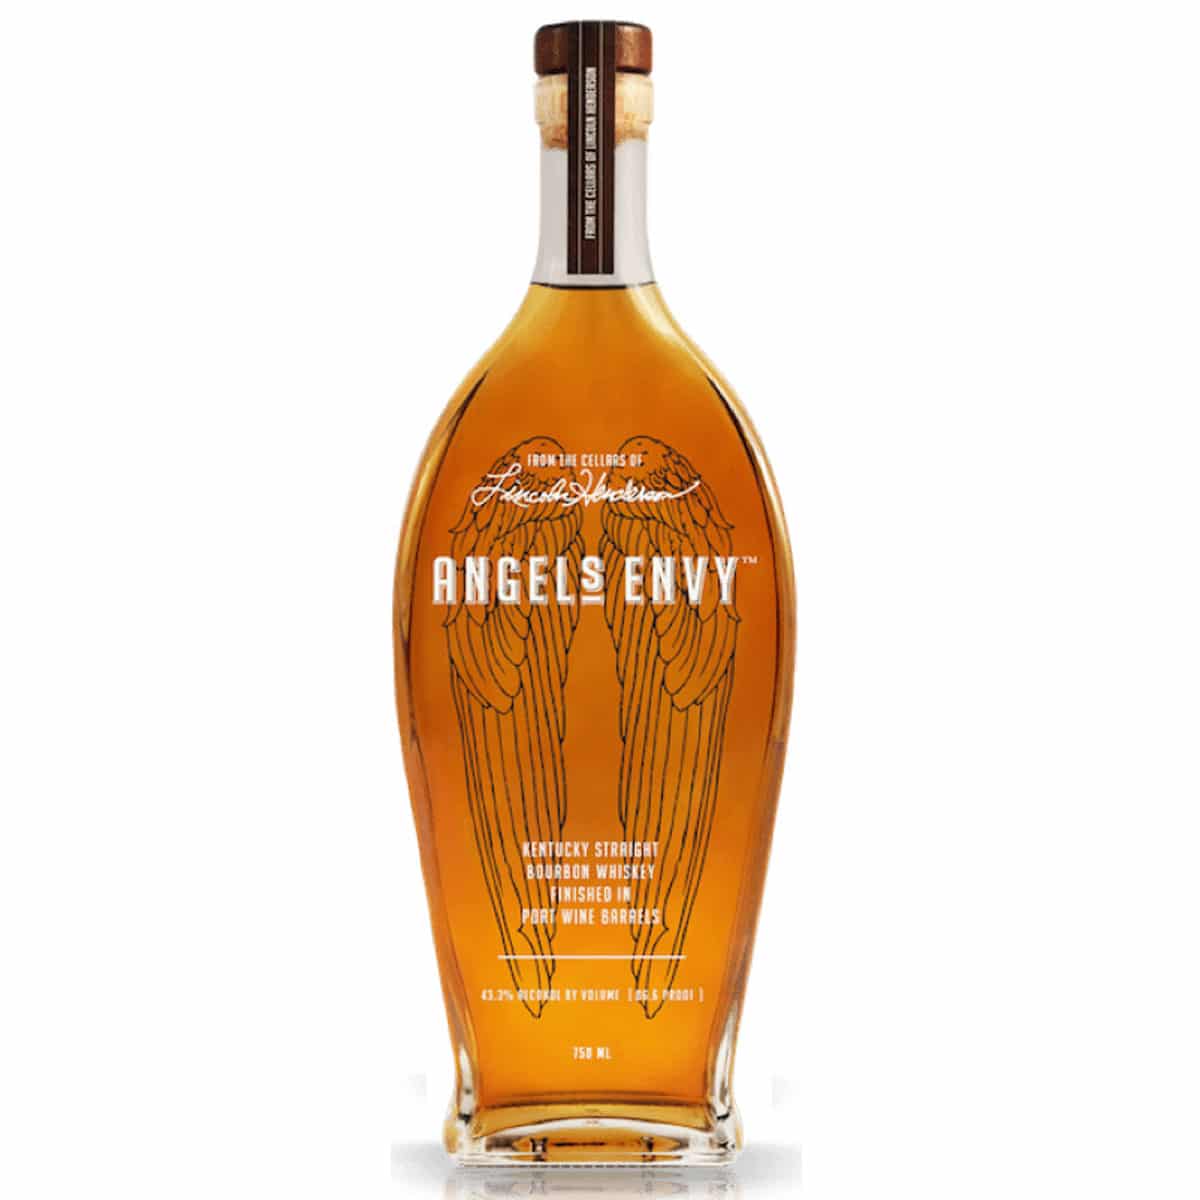 Angels Envy Port Finish Kentucky Straight Bourbon Whiskey - Barbank